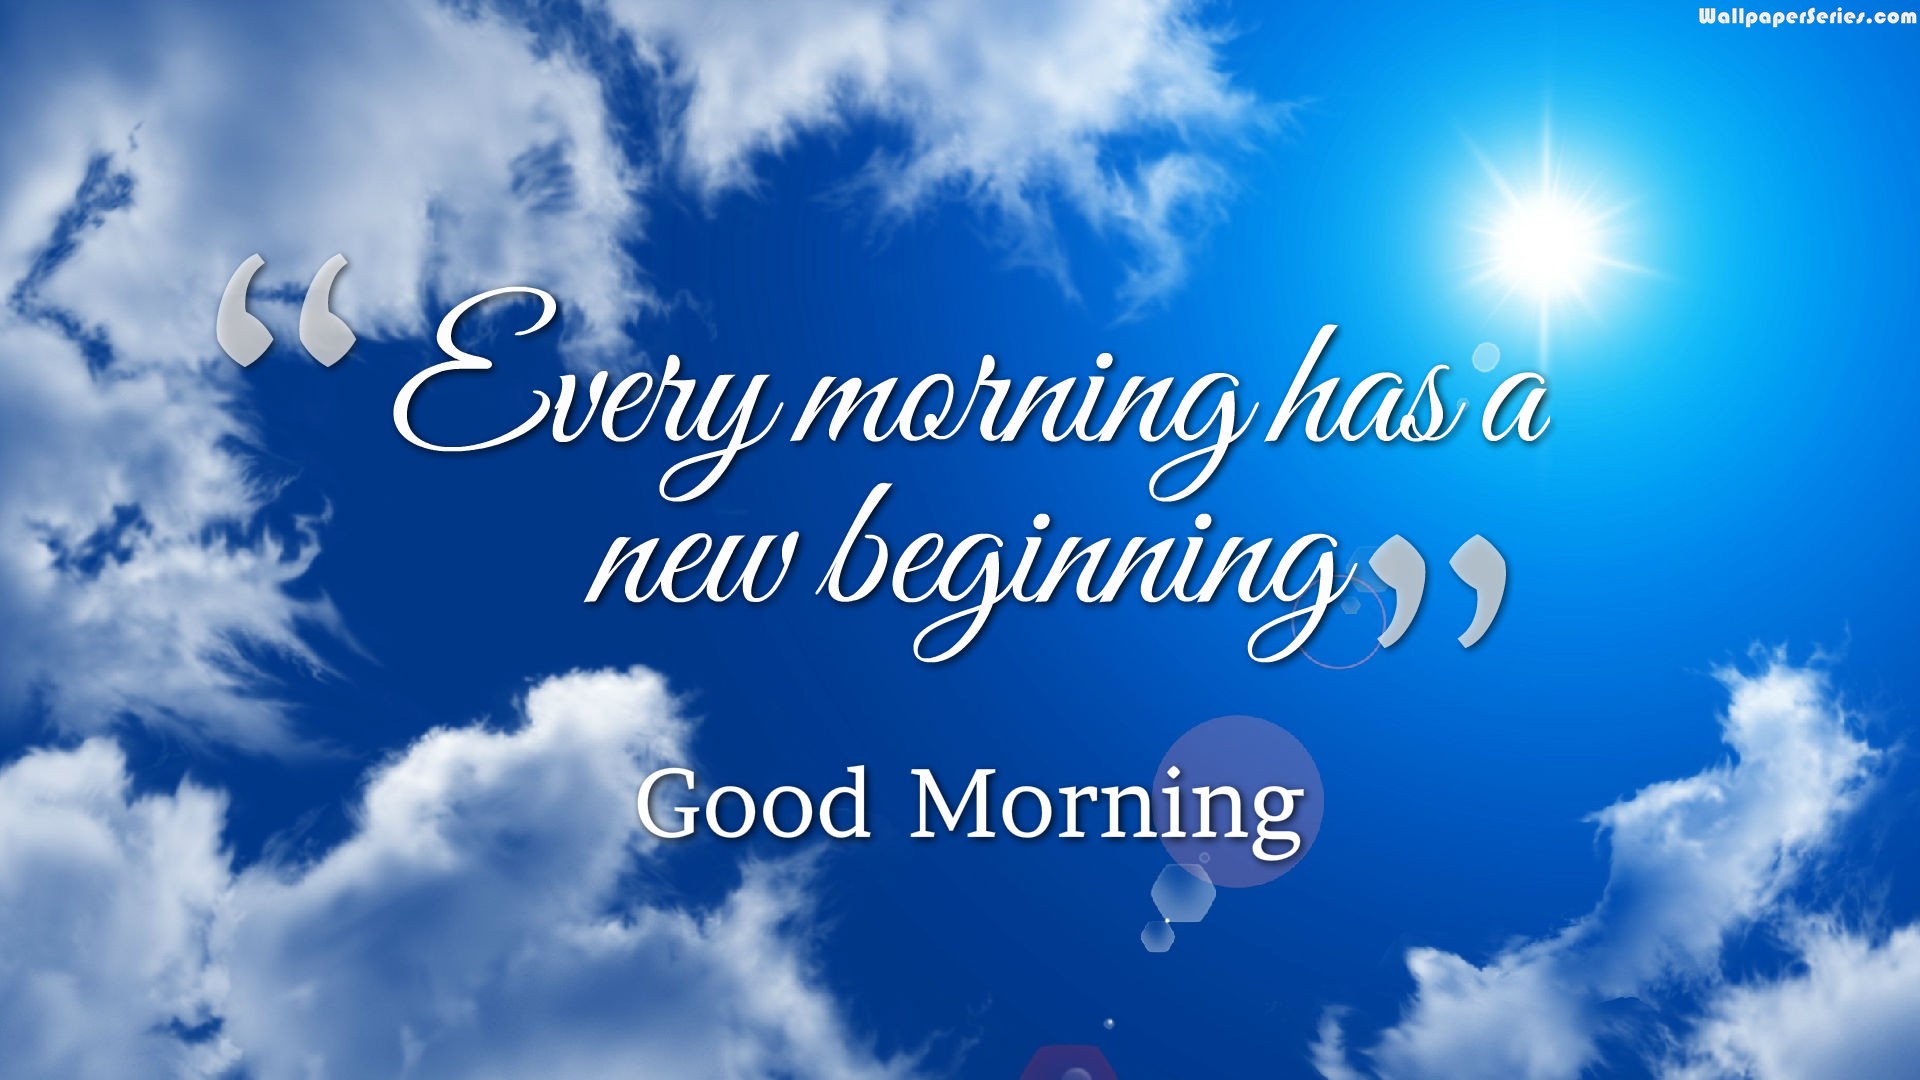 New Beginning Good Morning Quotes Wallpaper - Good Morning Quotes New  Beginning - 1920x1080 Wallpaper 